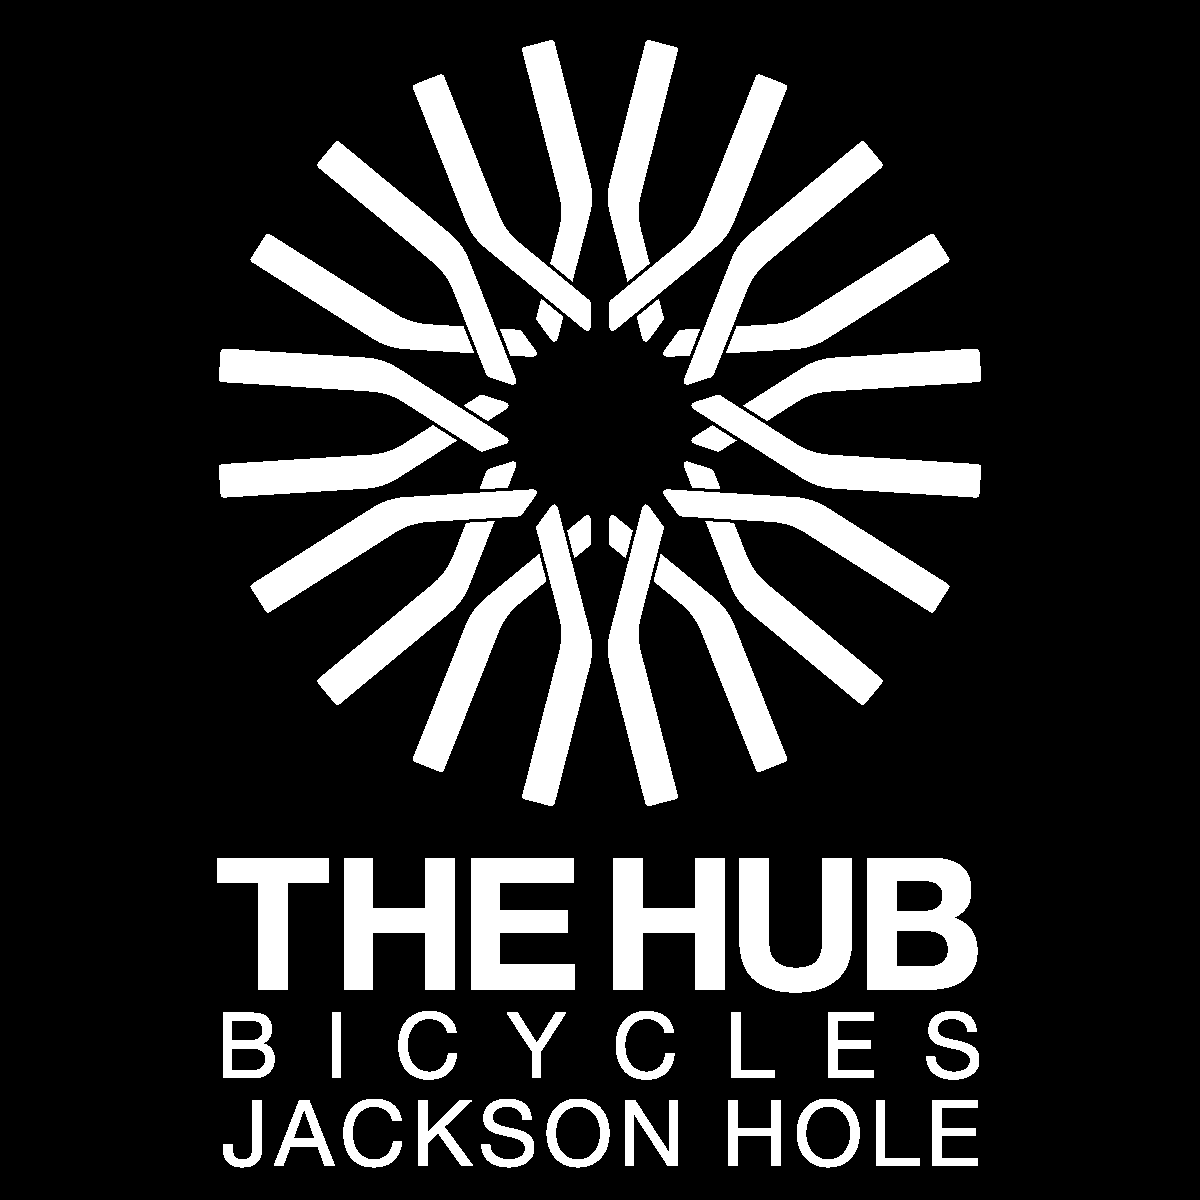 the hub bicycles Jackson hole